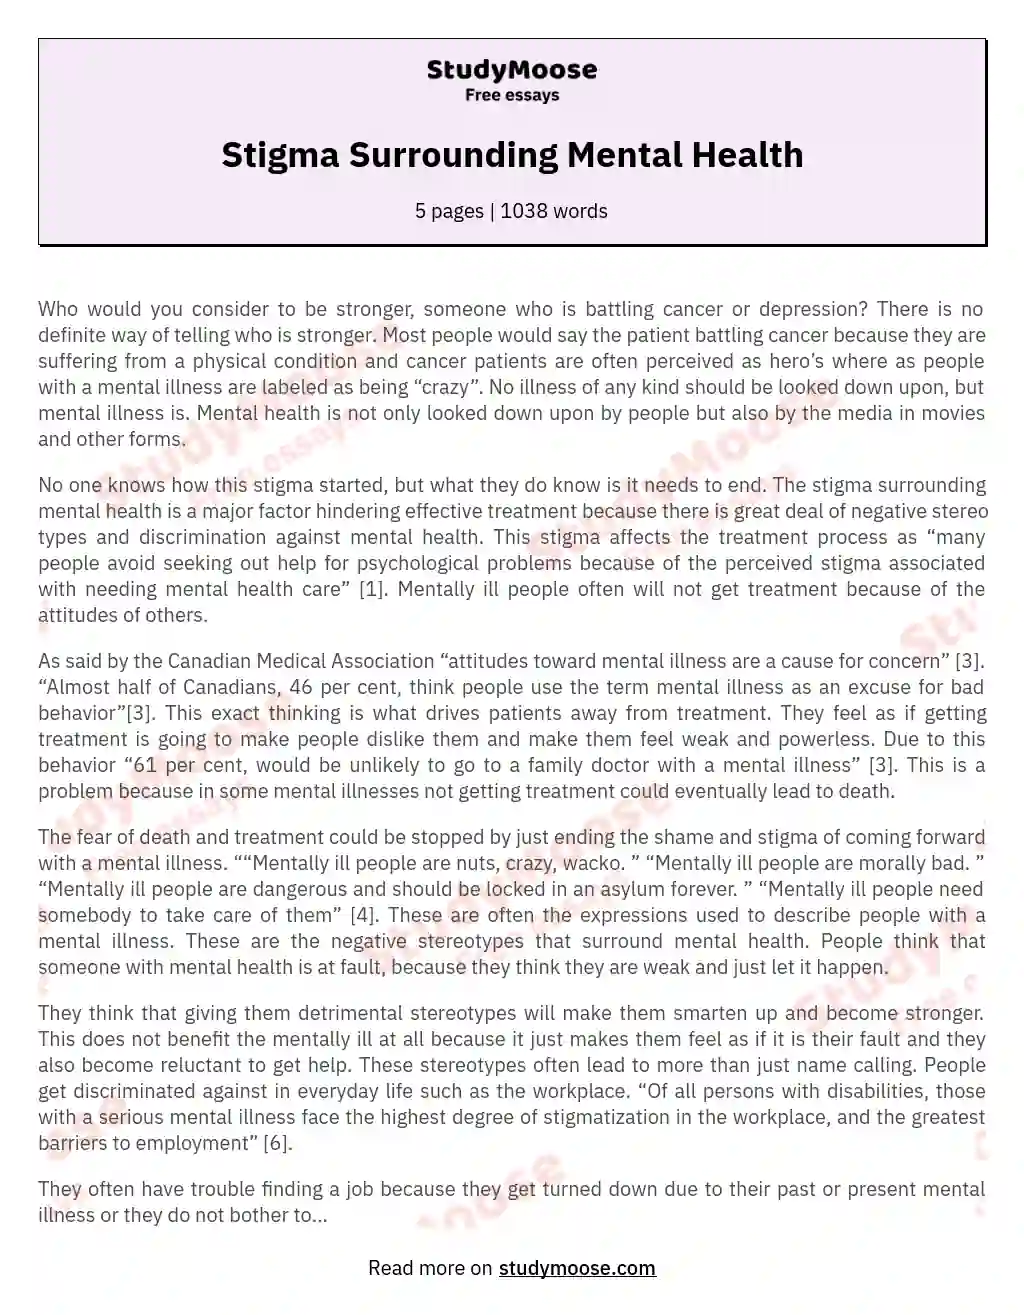 The Stigma Surrounding Mental Health essay